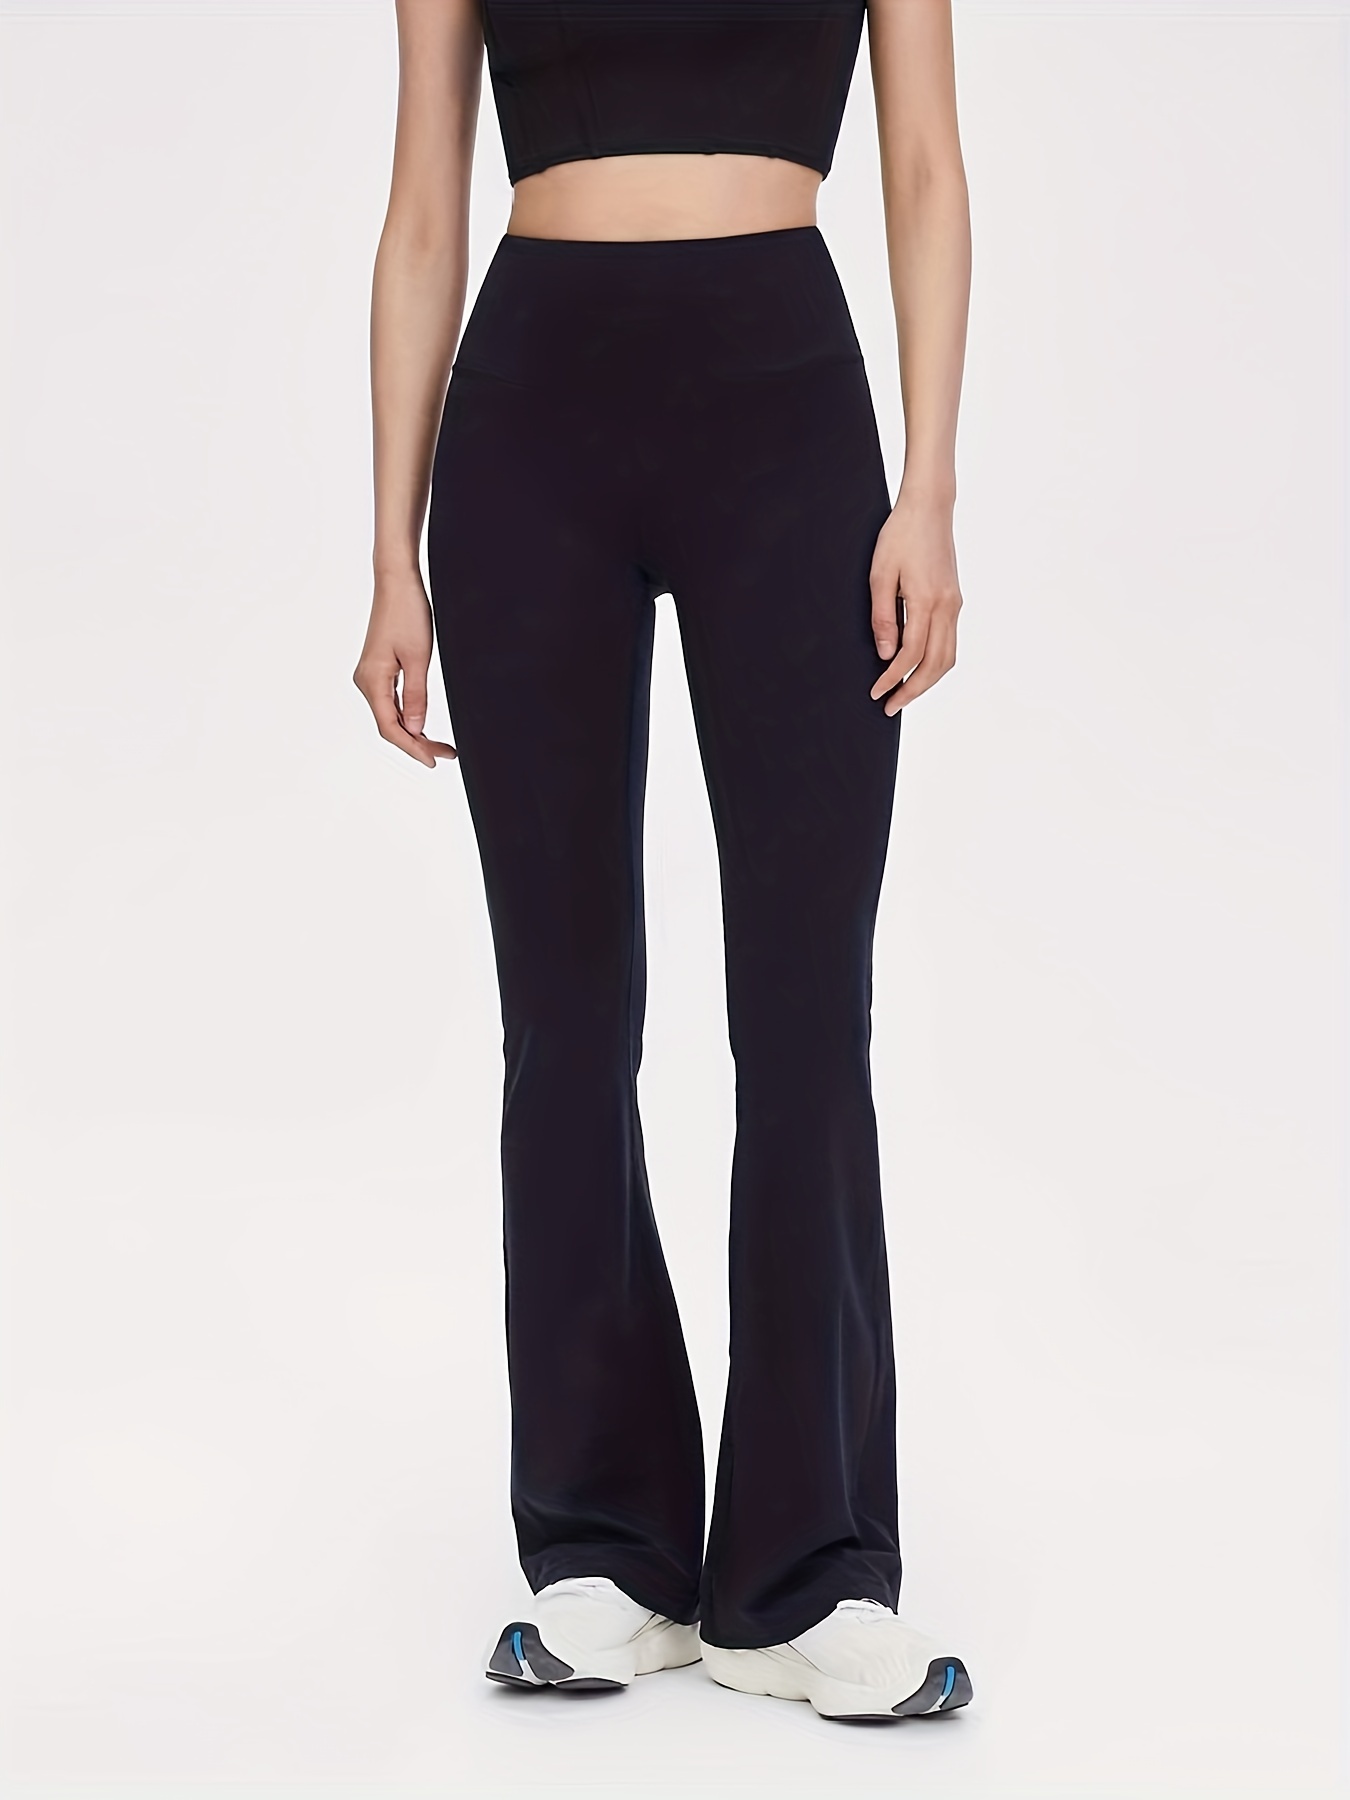 XFLWAM Women's Flared Yoga Pants Leggings Bootcut Crossover High-Waist  Front Slit Plus Size Workout Pants Black M 